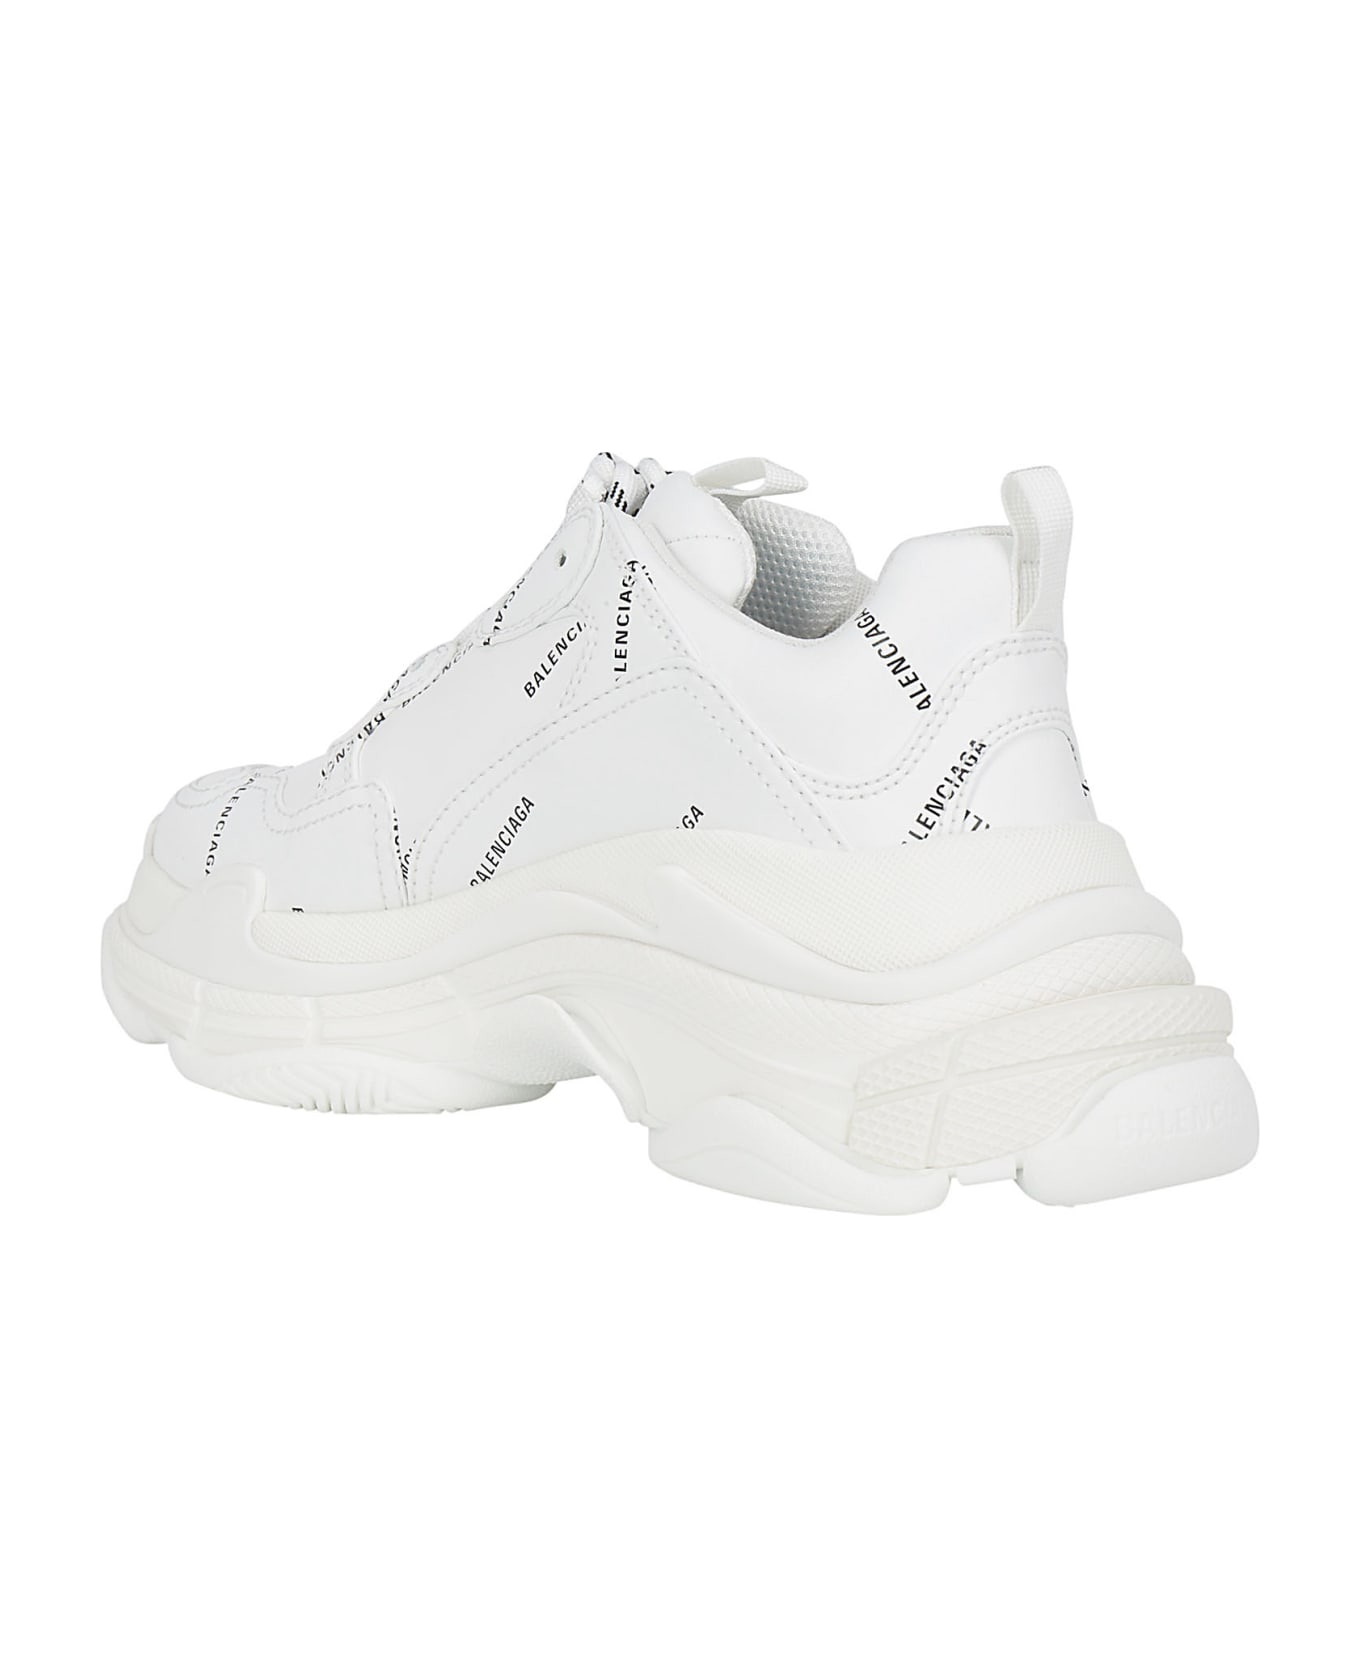 Balenciaga Triple S Sneakers - White/black